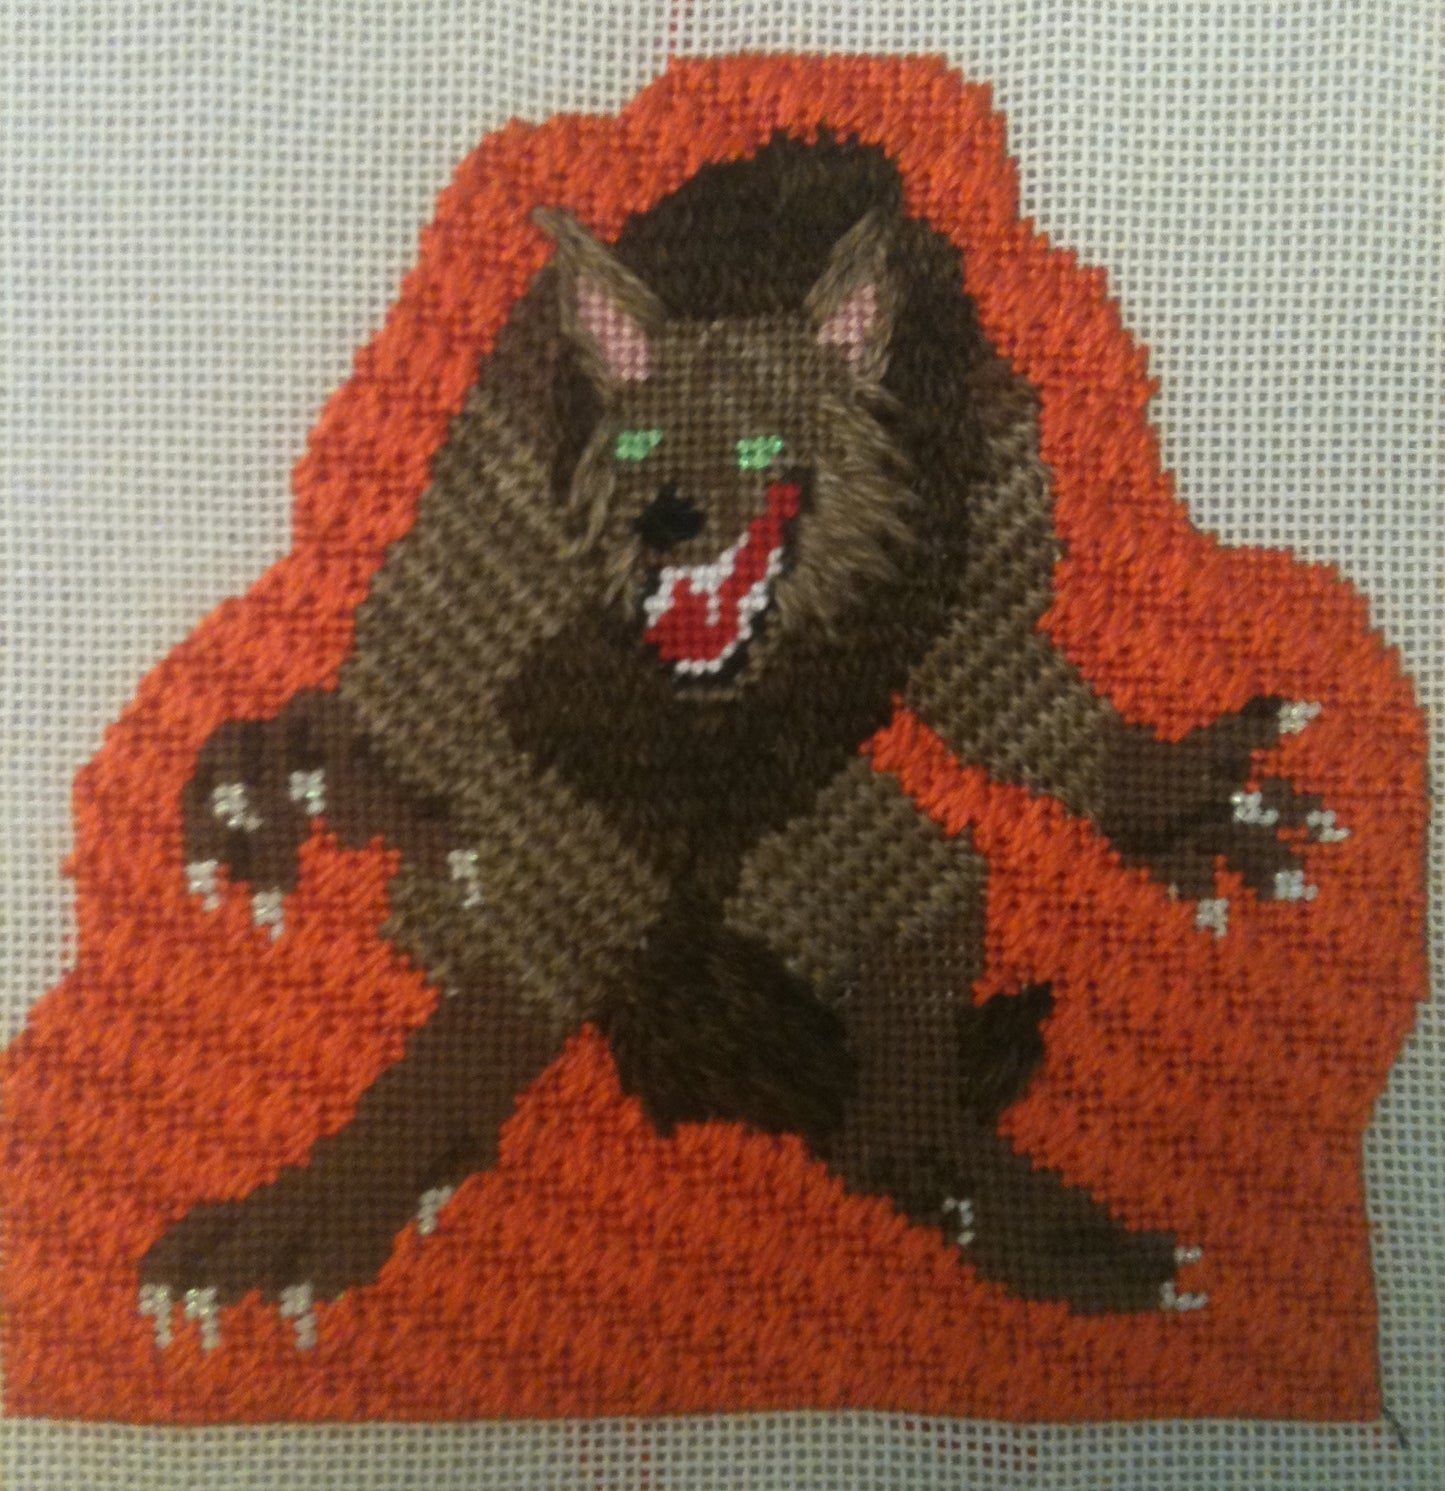 Halloween Wilfrid the werewolf with stitch guide